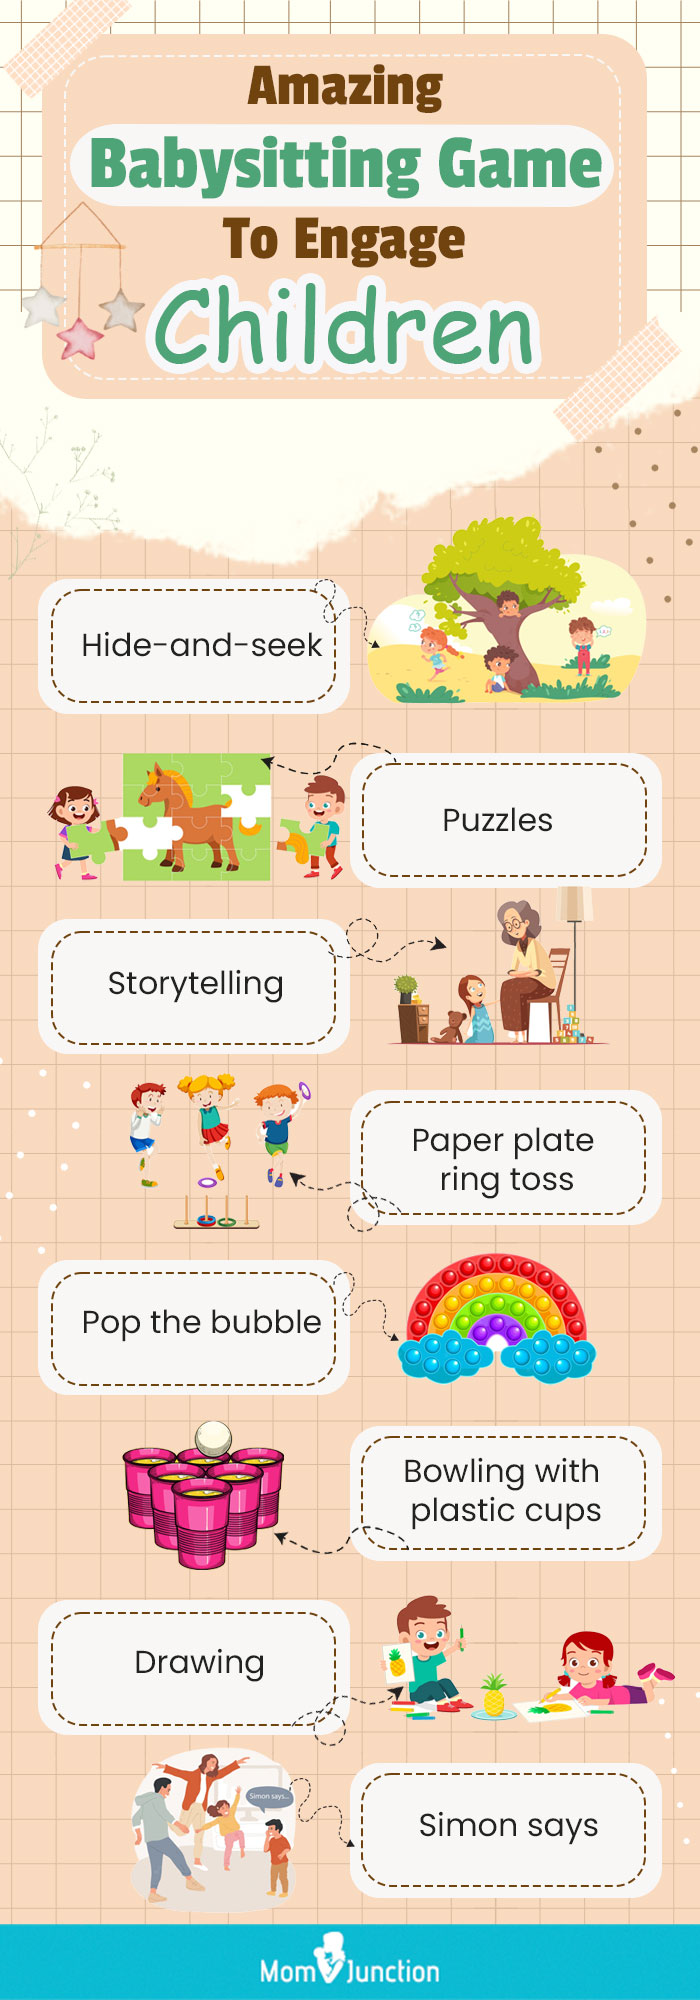 amazing babysitting game to engage children (infographic)